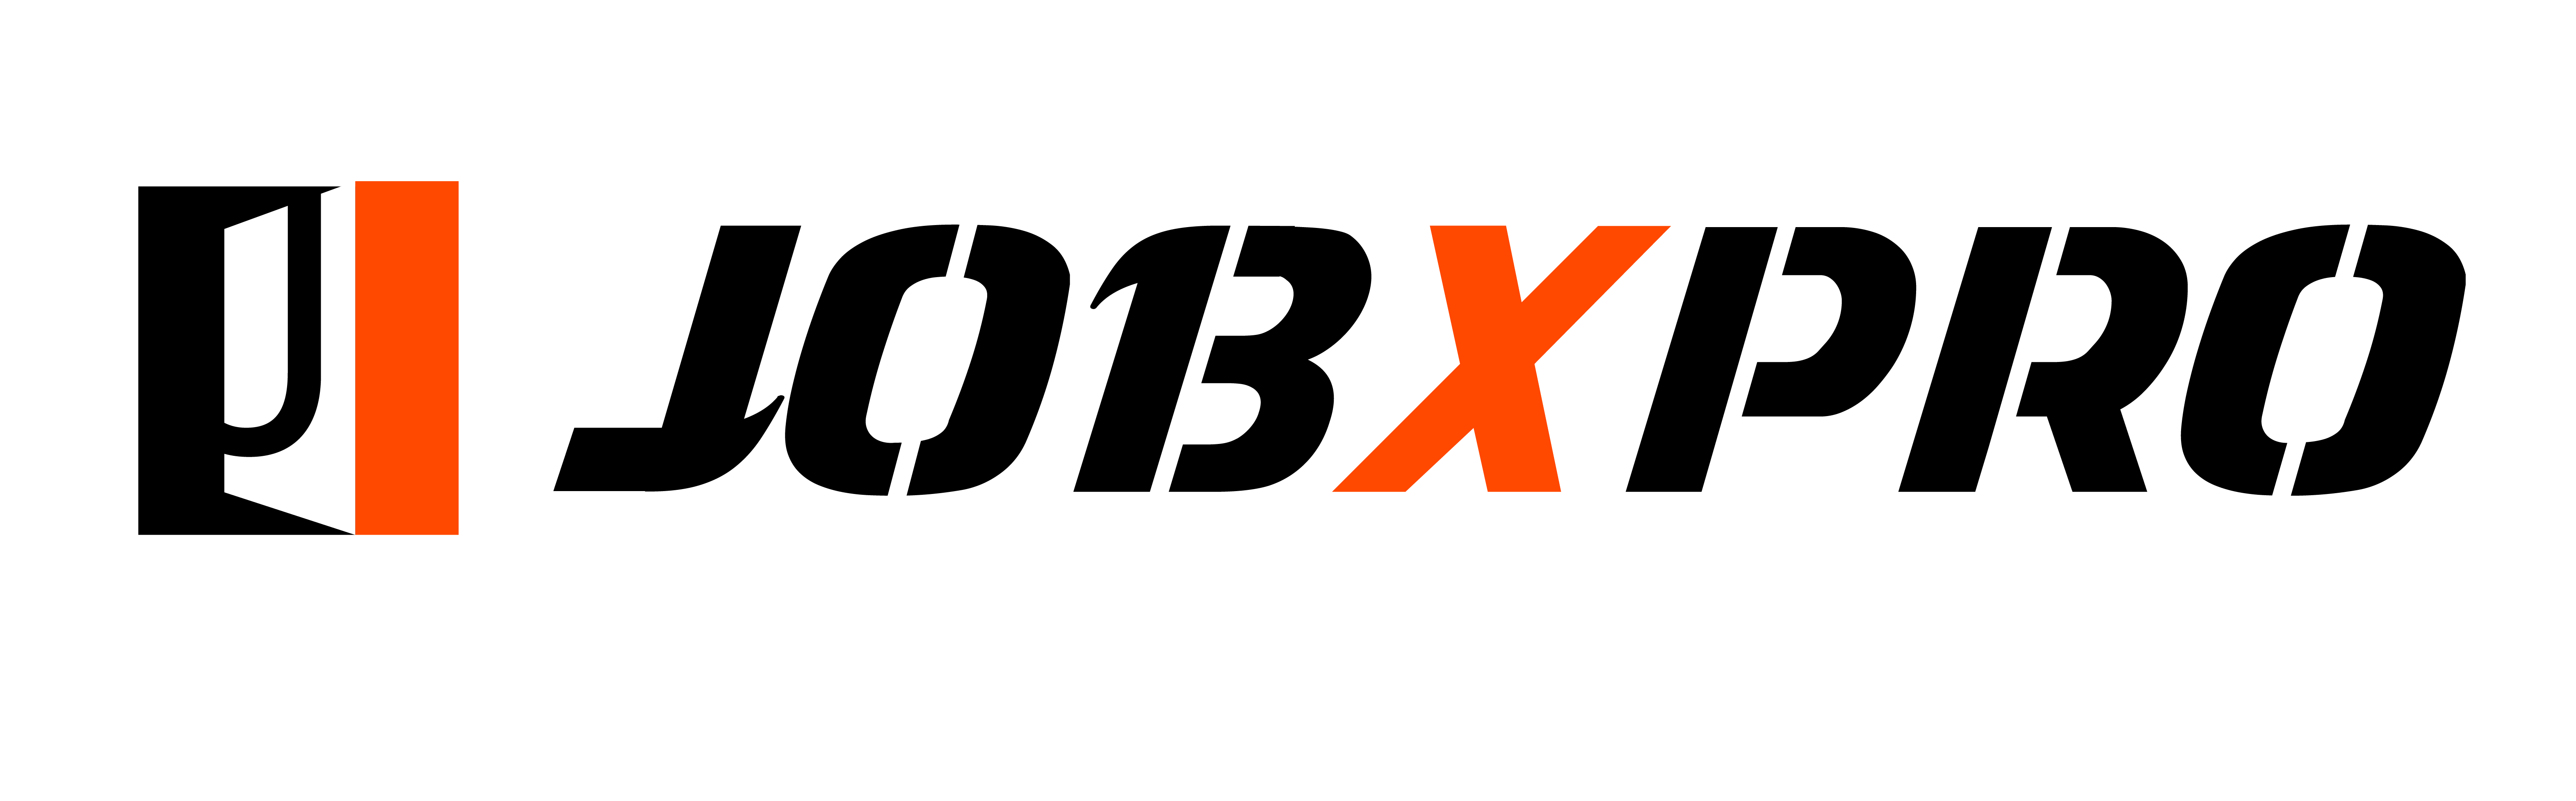 JOBXPRO Logo